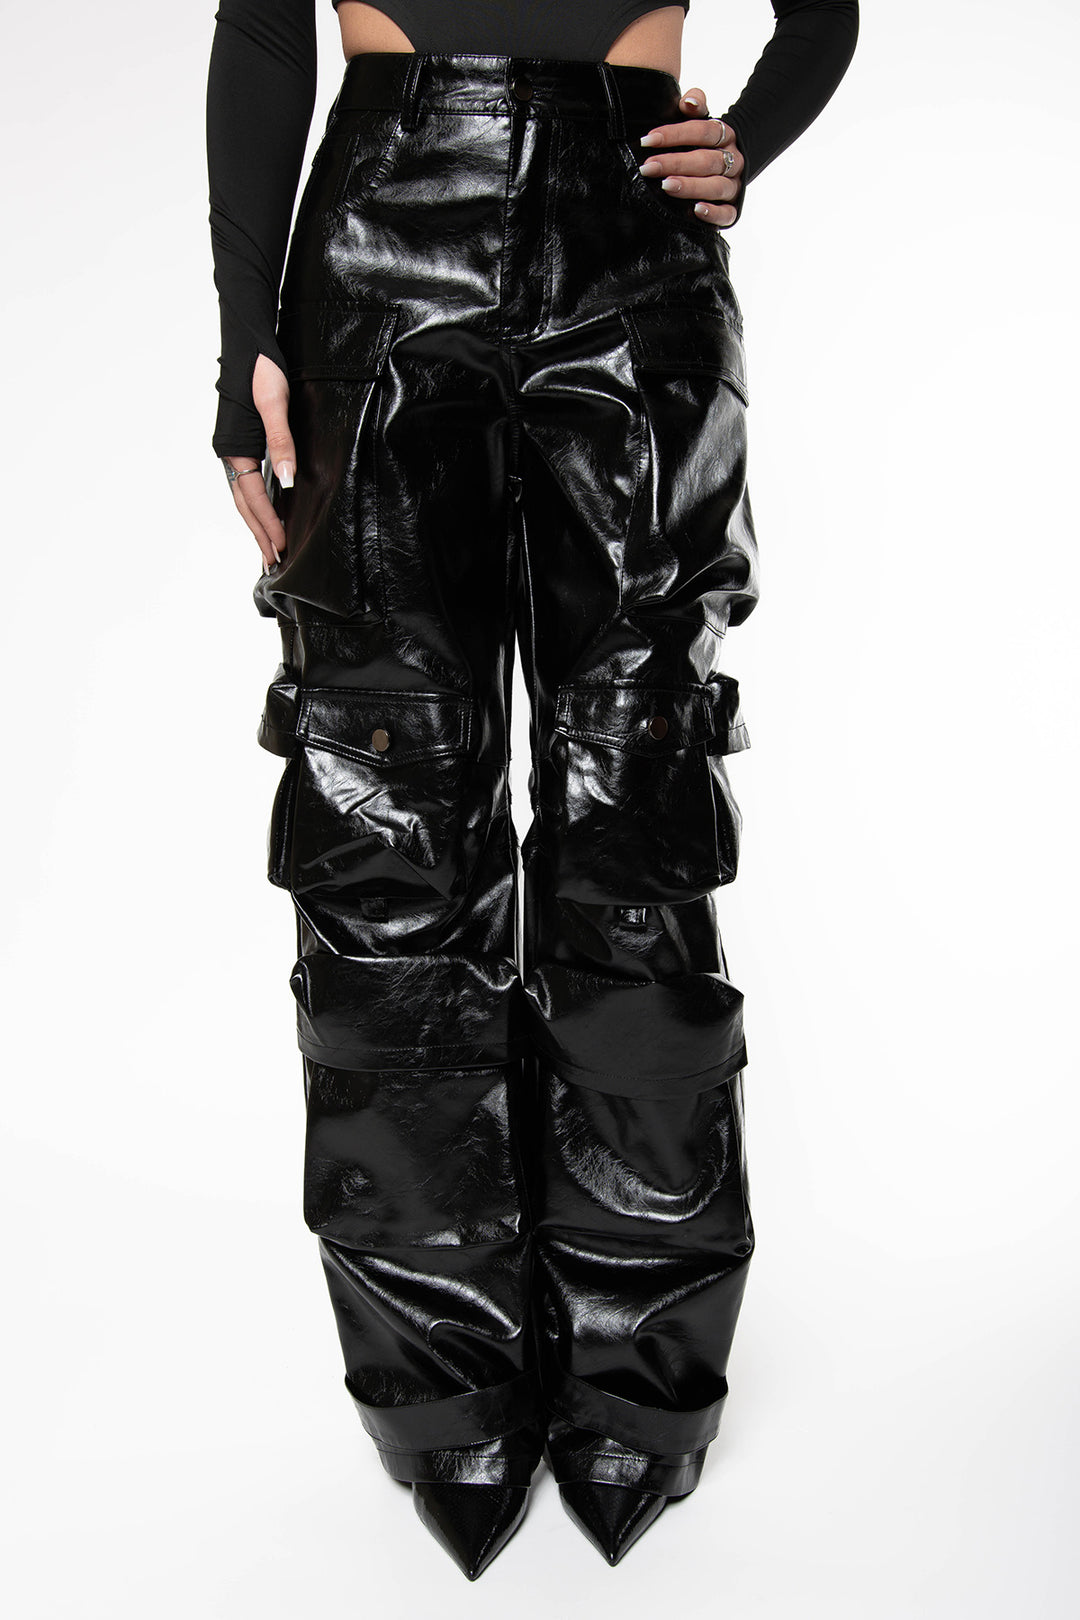 Ahvery Vinyl Multipocket Leatherlook Cargo Pants - Black Pants Routines Fashion   